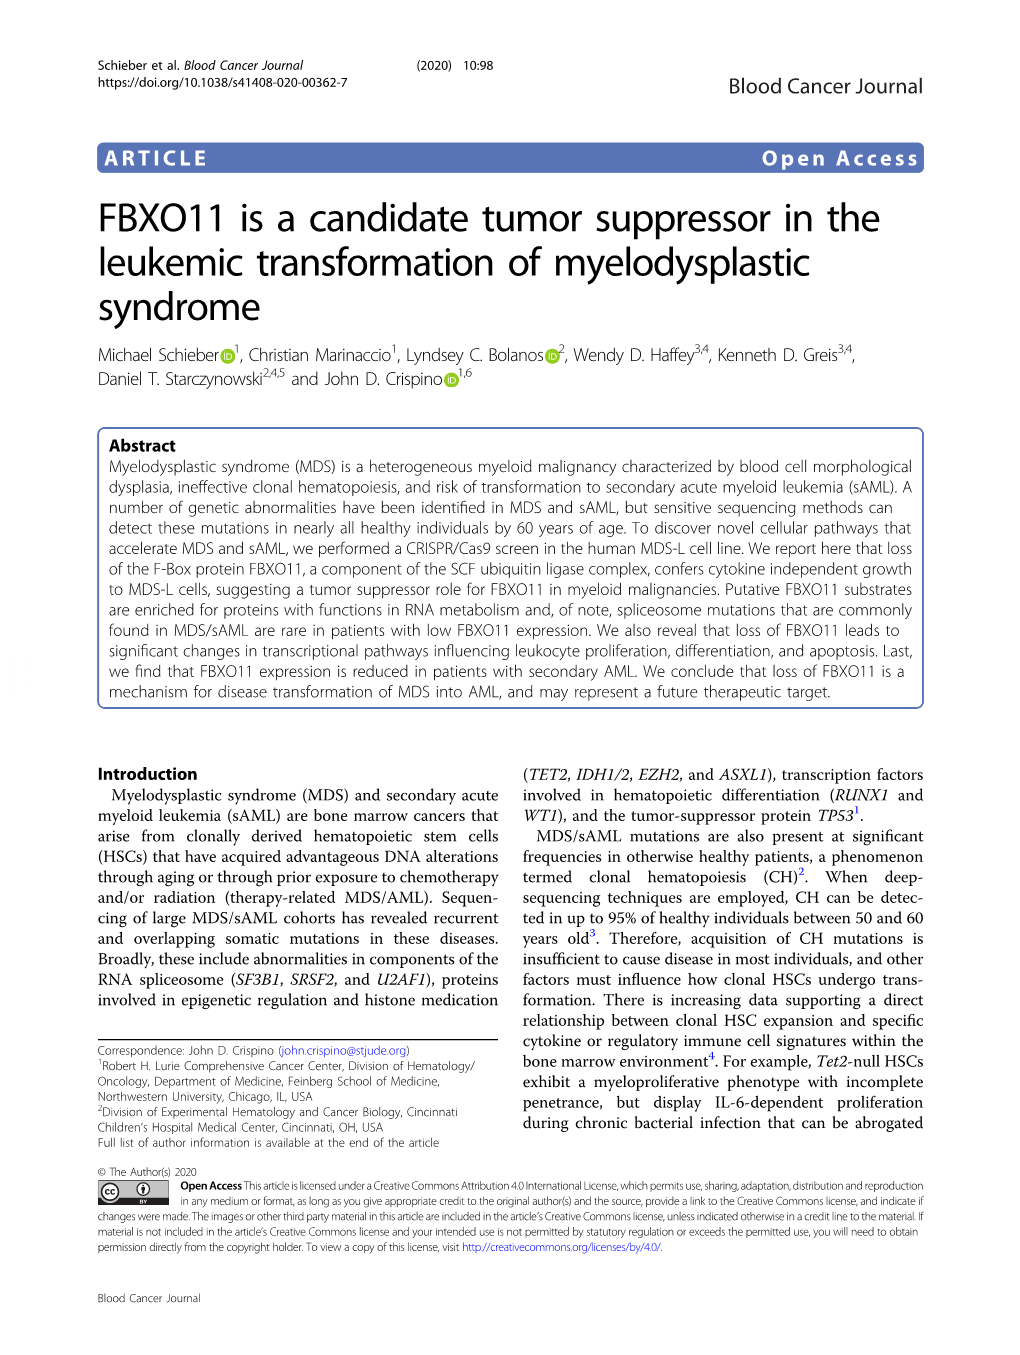 FBXO11 Is a Candidate Tumor Suppressor in the Leukemic Transformation of Myelodysplastic Syndrome Michael Schieber 1, Christian Marinaccio1, Lyndsey C